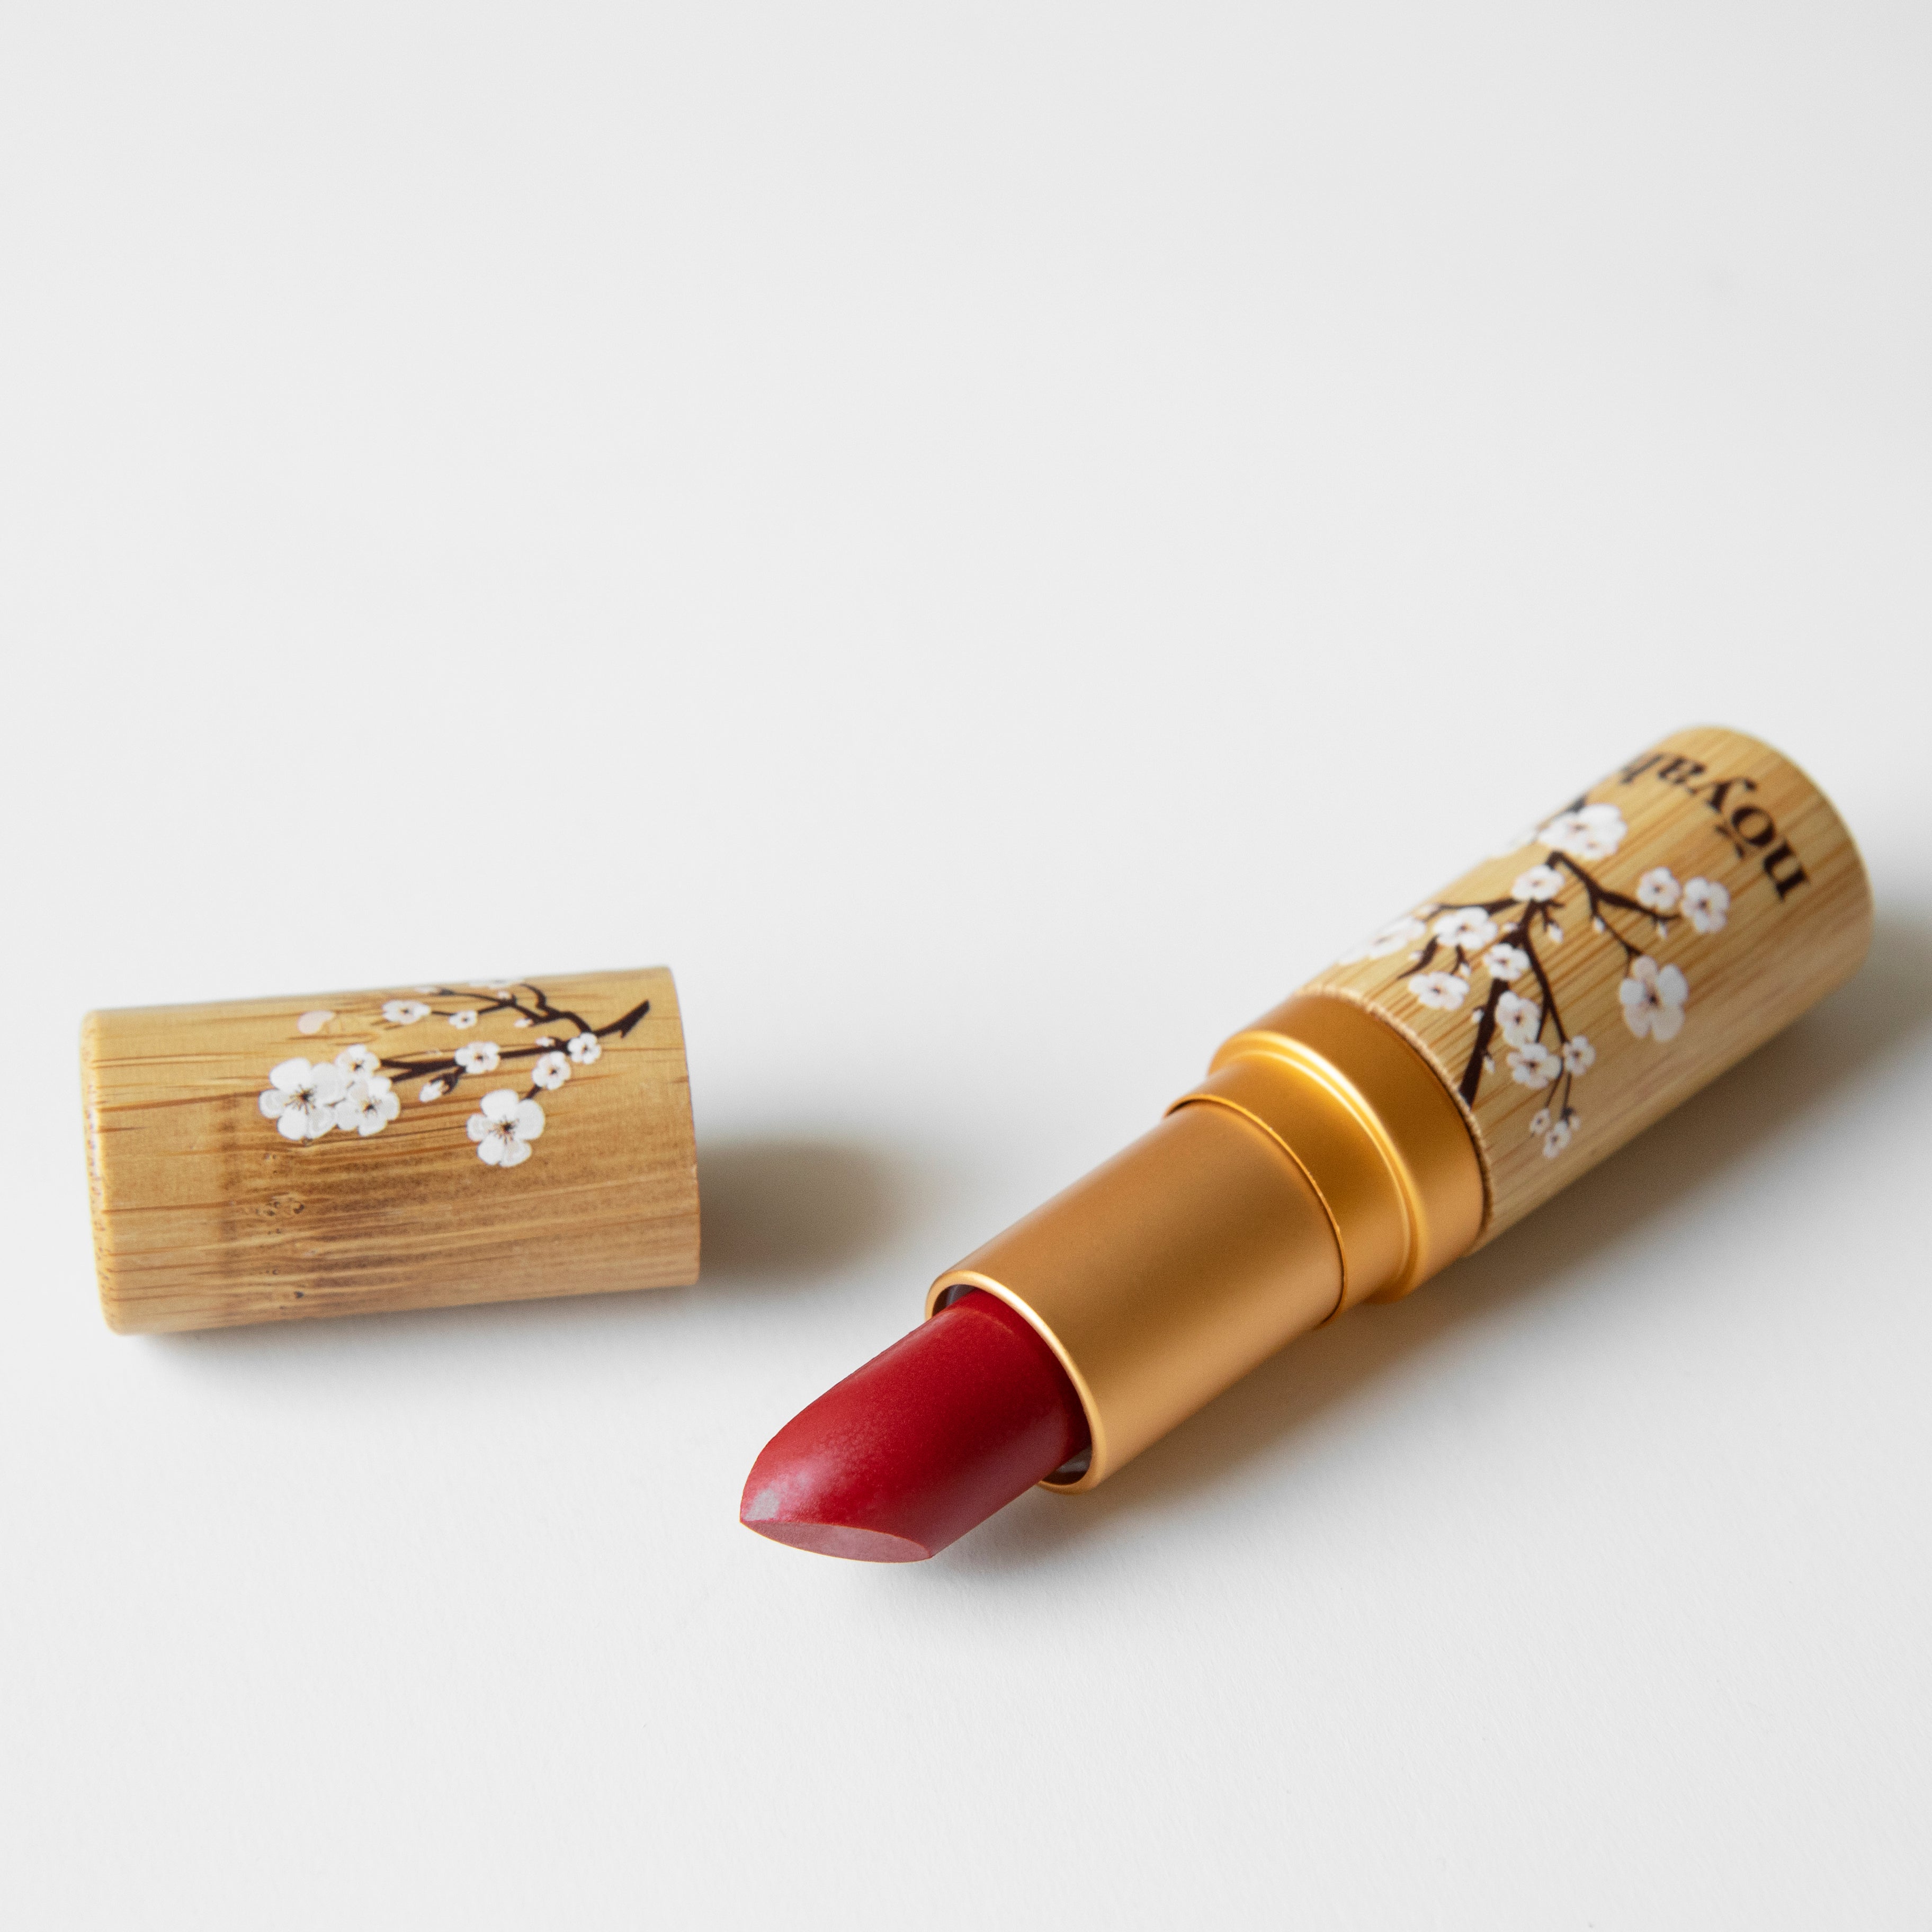 Noyah Lipstick (Empire Red) 唇天然唇膏 (經典紅) 4.5g